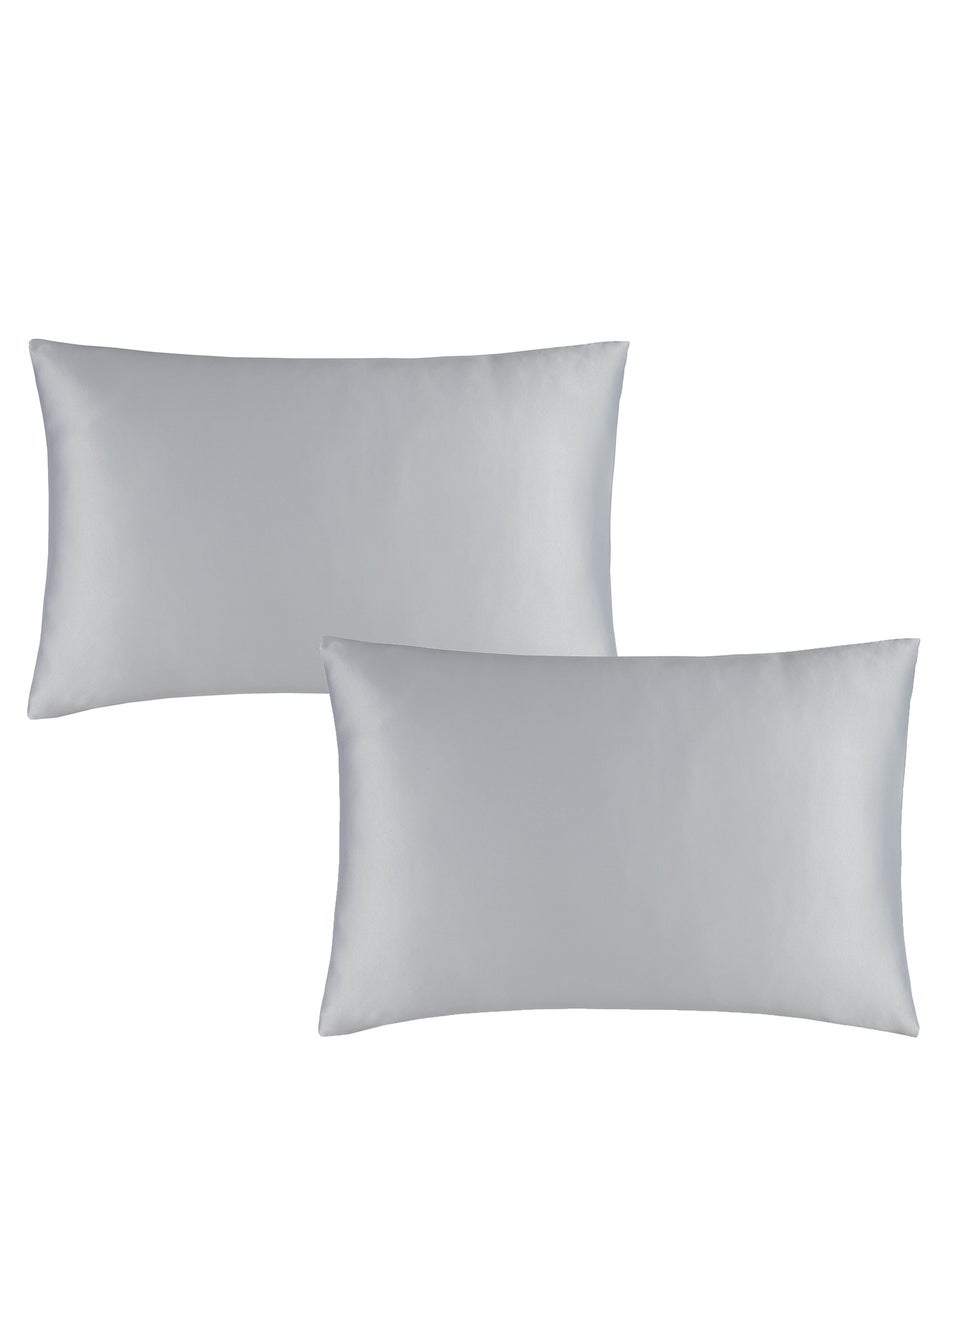 Catherine Lansfield Silky Soft Satin Standard Pillowcase Pair